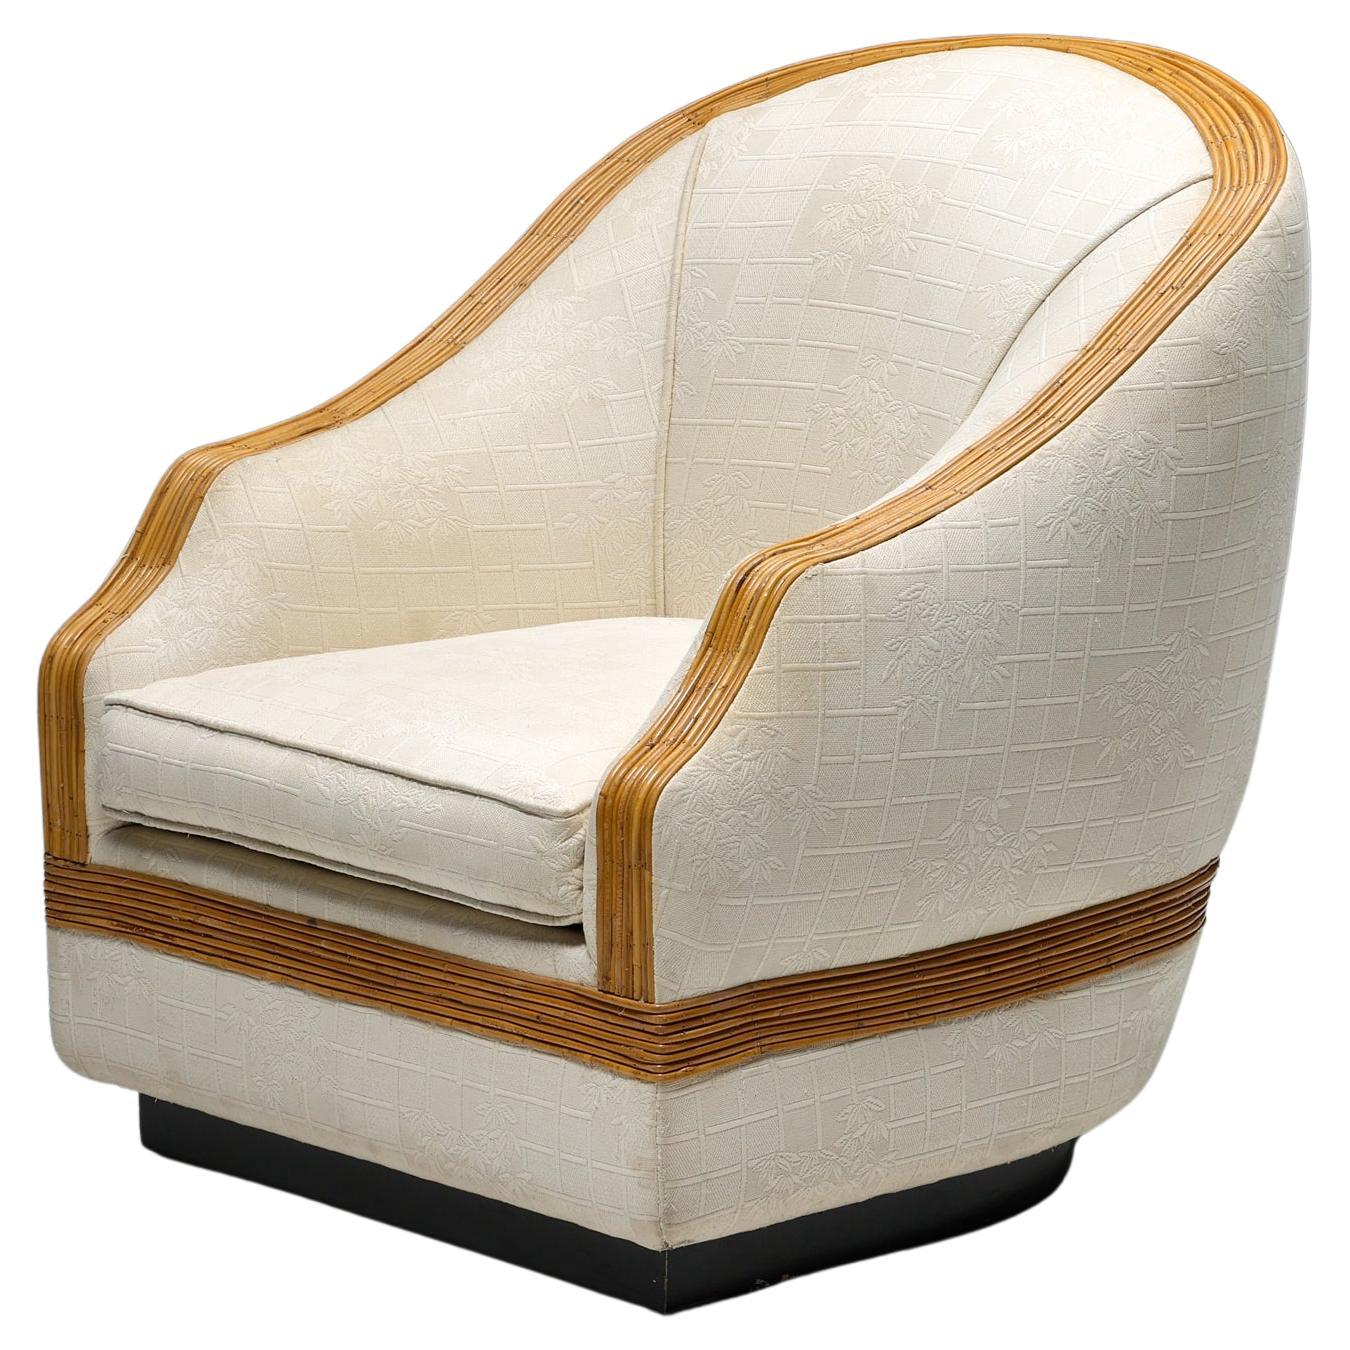 Vivai del Sud Bergère Chair, Italian Tropicalist Style, Rattan, Silk, 1970's